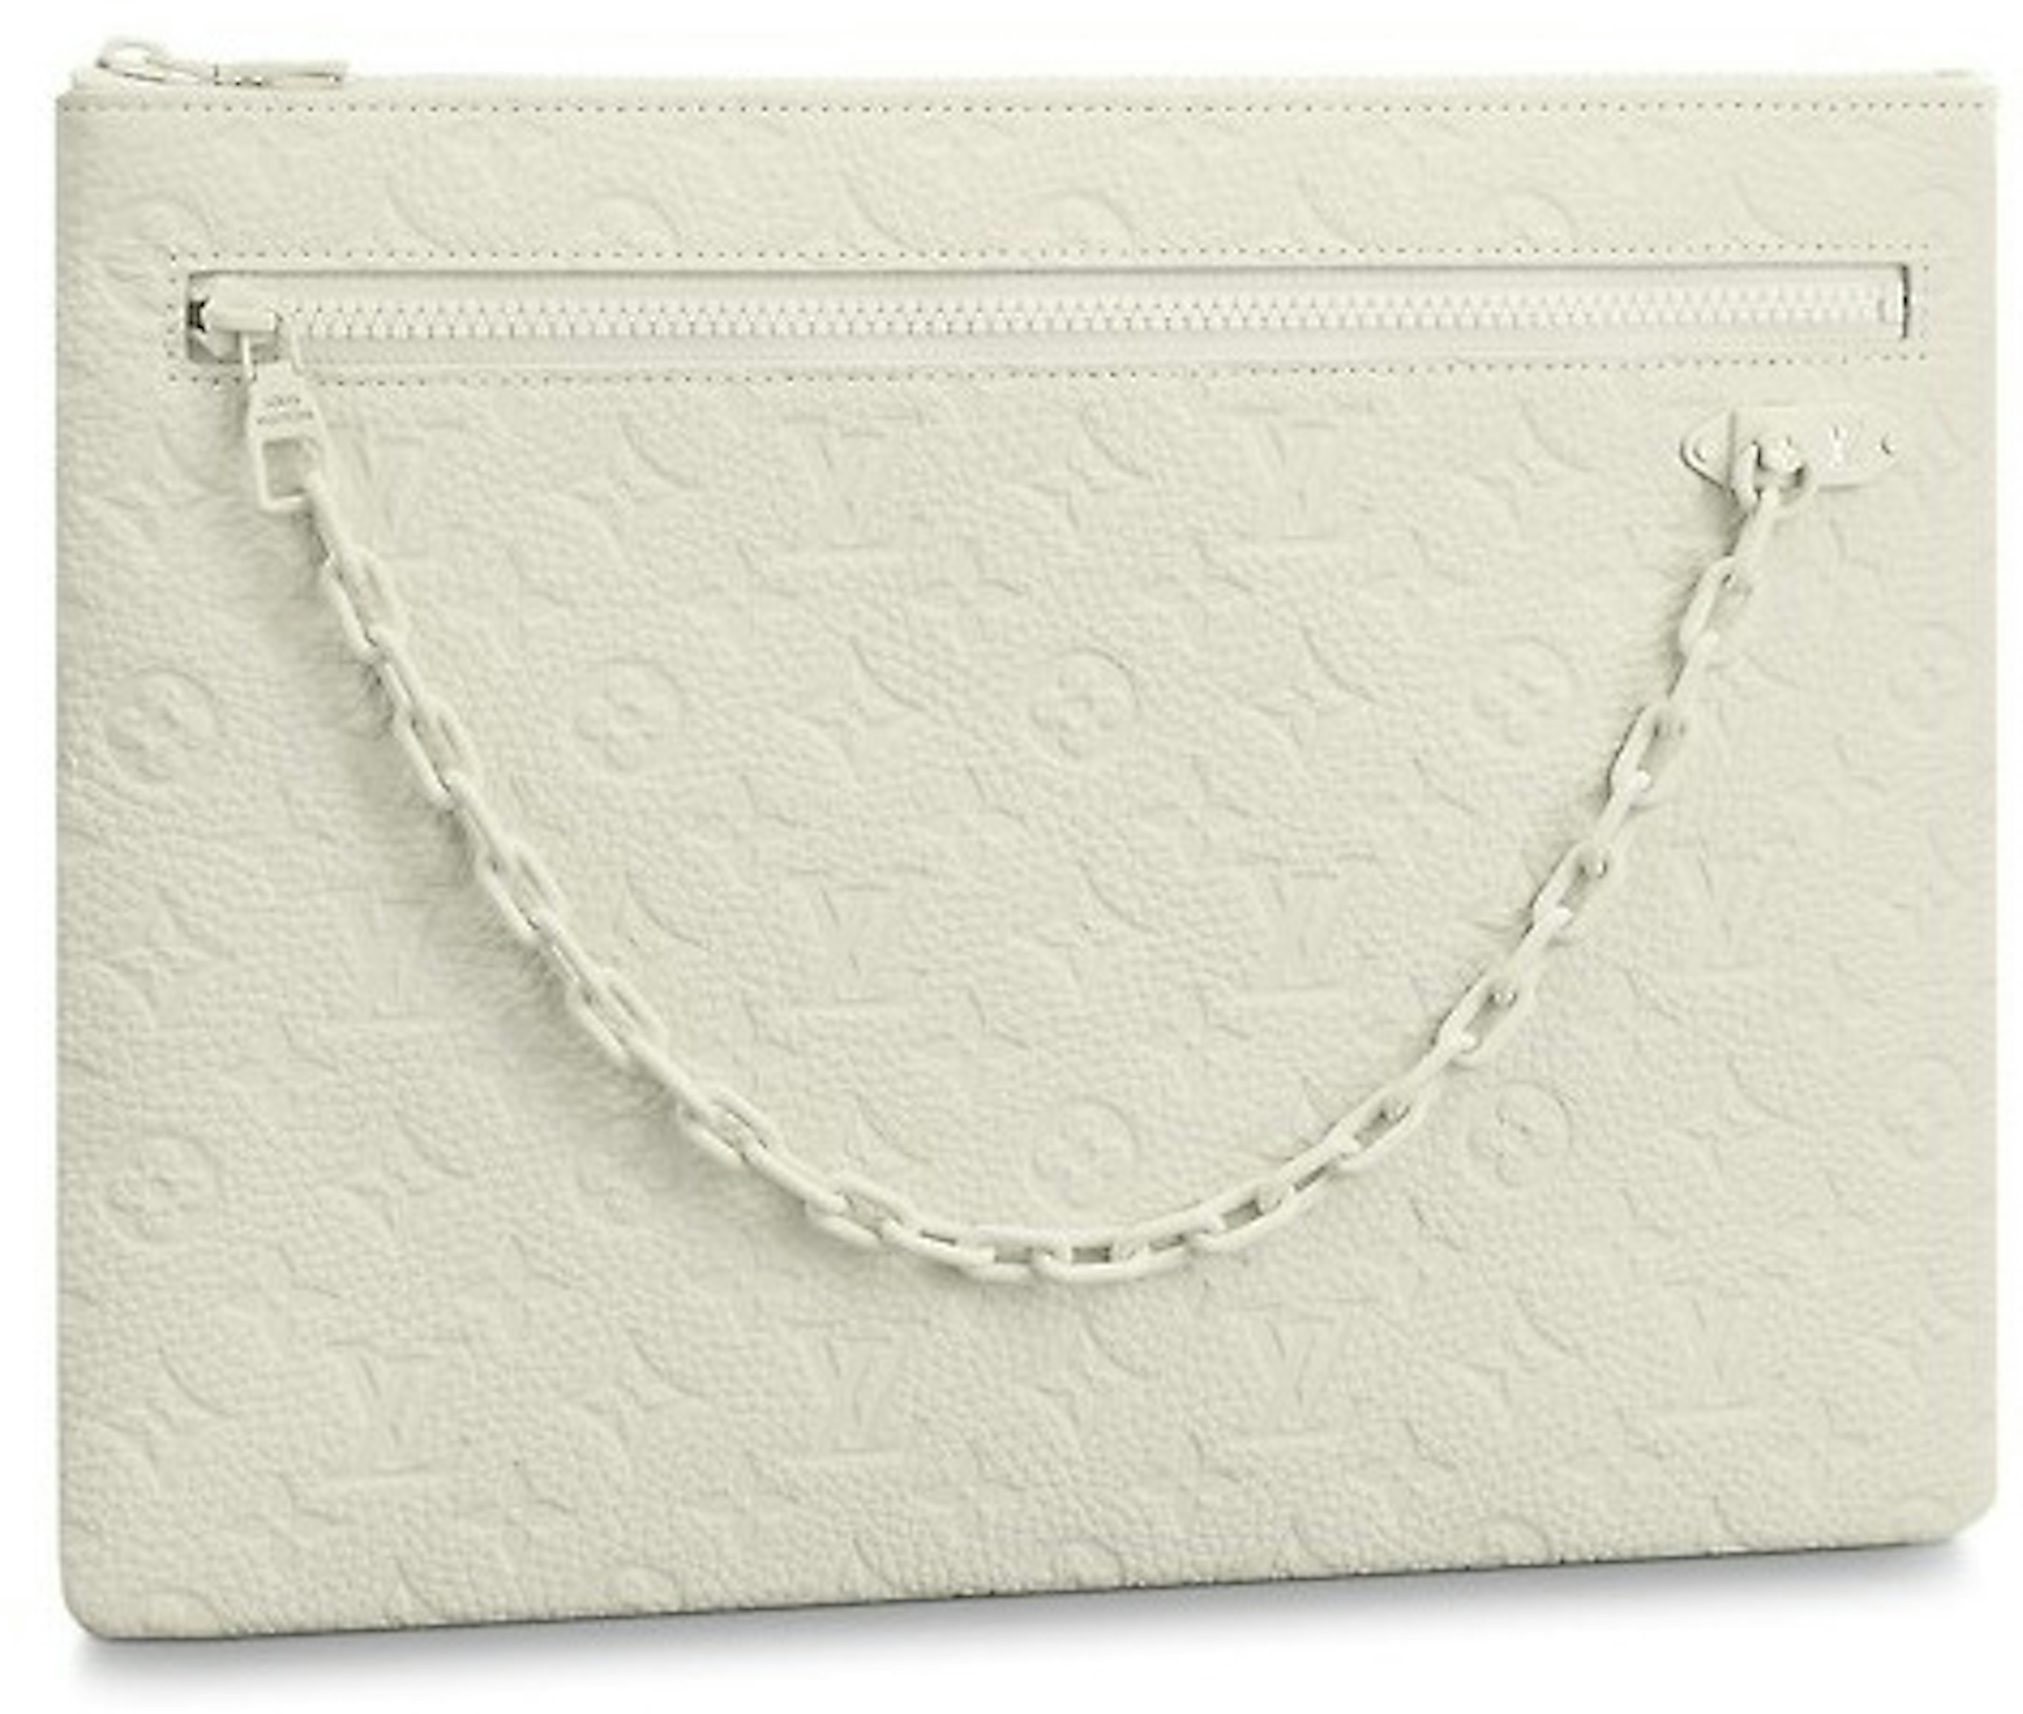 Louis Vuitton Pouch White Leather